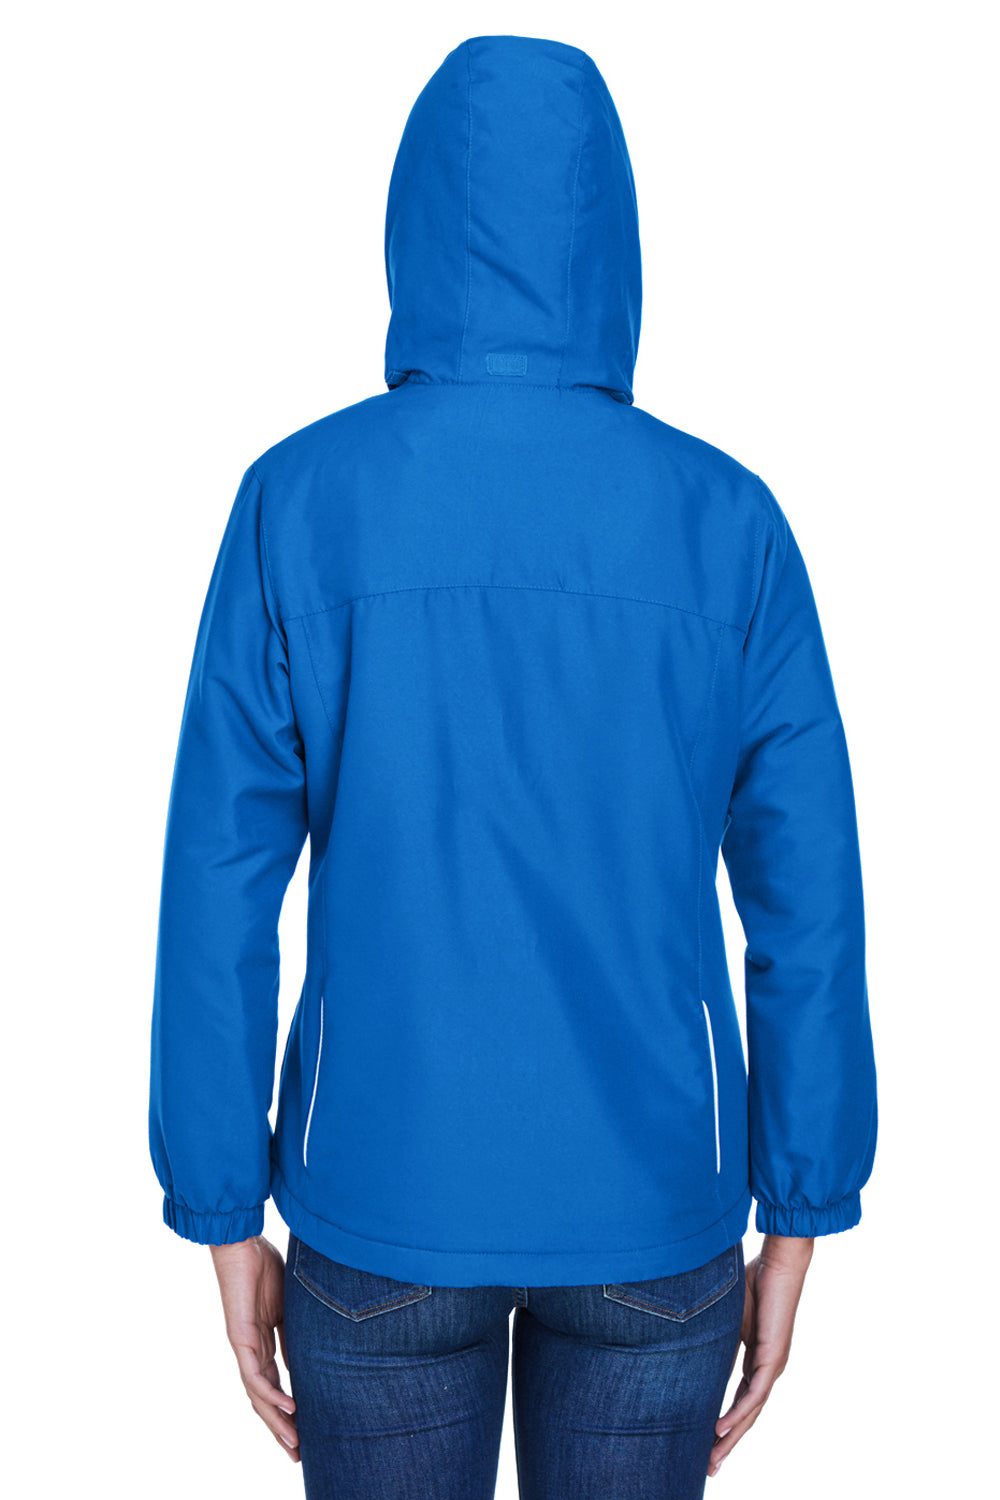 Core 365 78189 Womens Brisk Full Zip Hooded Jacket Royal Blue Back